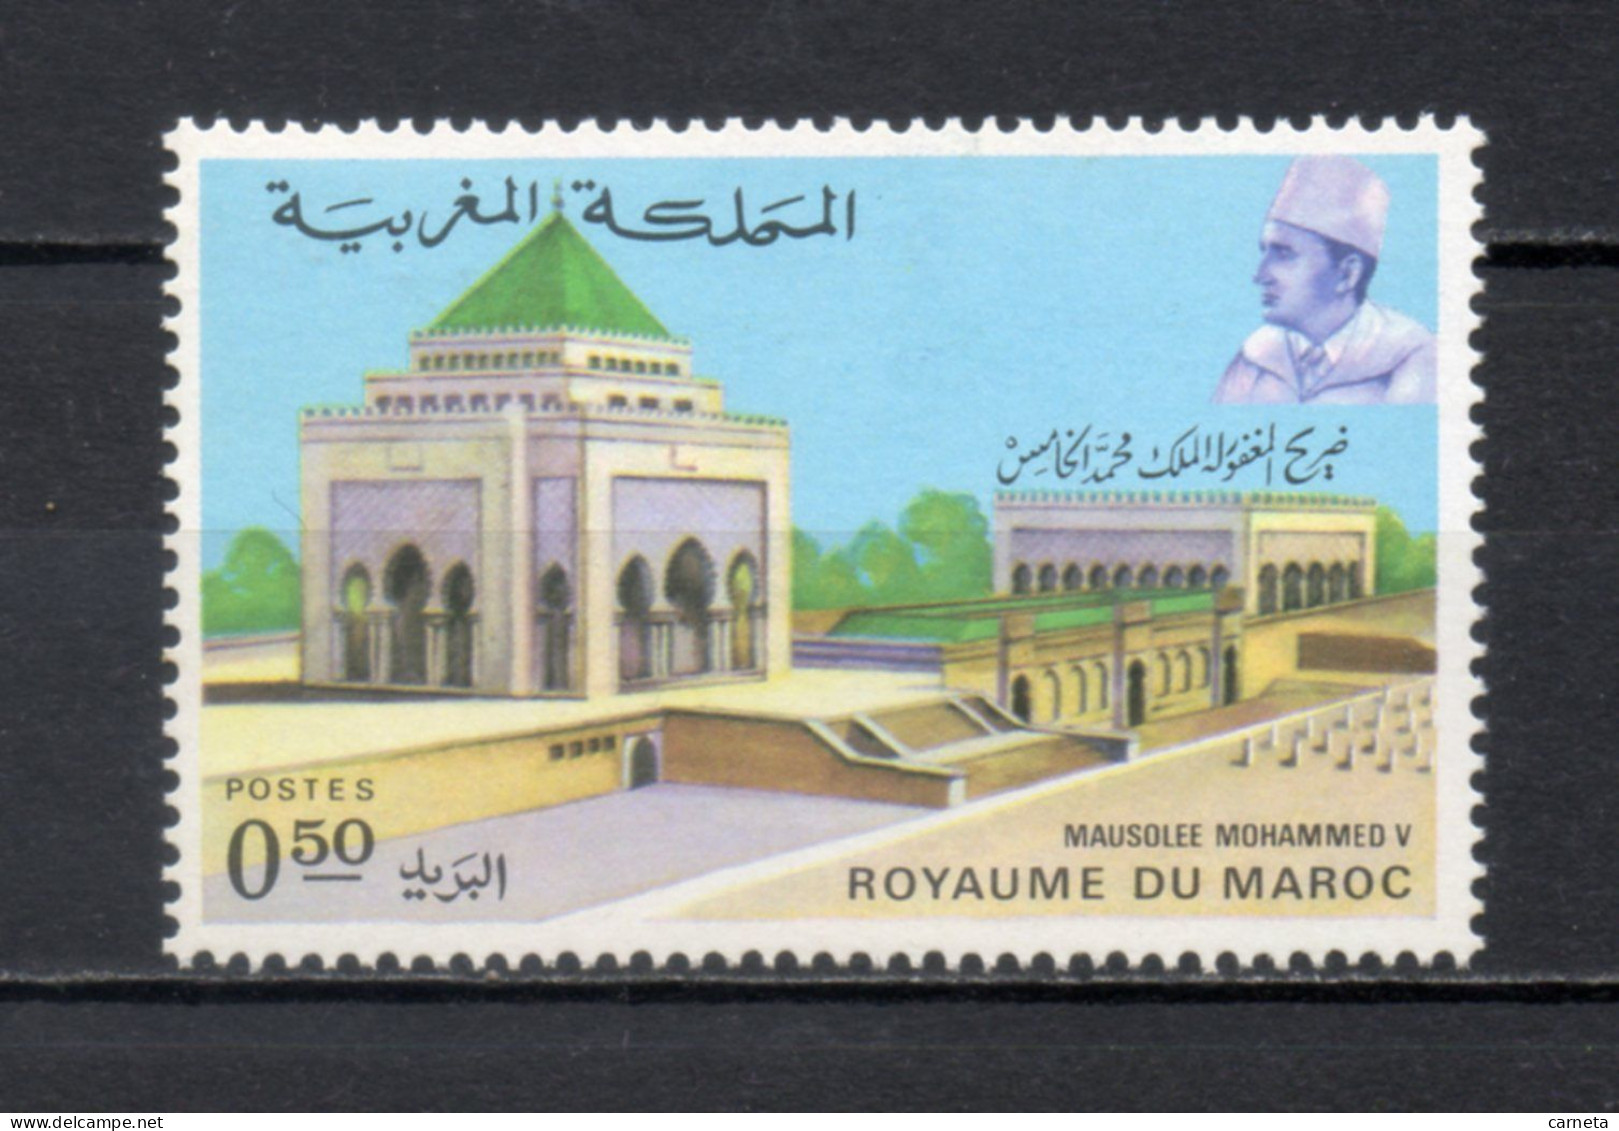 MAROC N°  623   NEUF SANS CHARNIERE  COTE  0.70€   MAUSOLEE DE MOHAMED V - Morocco (1956-...)